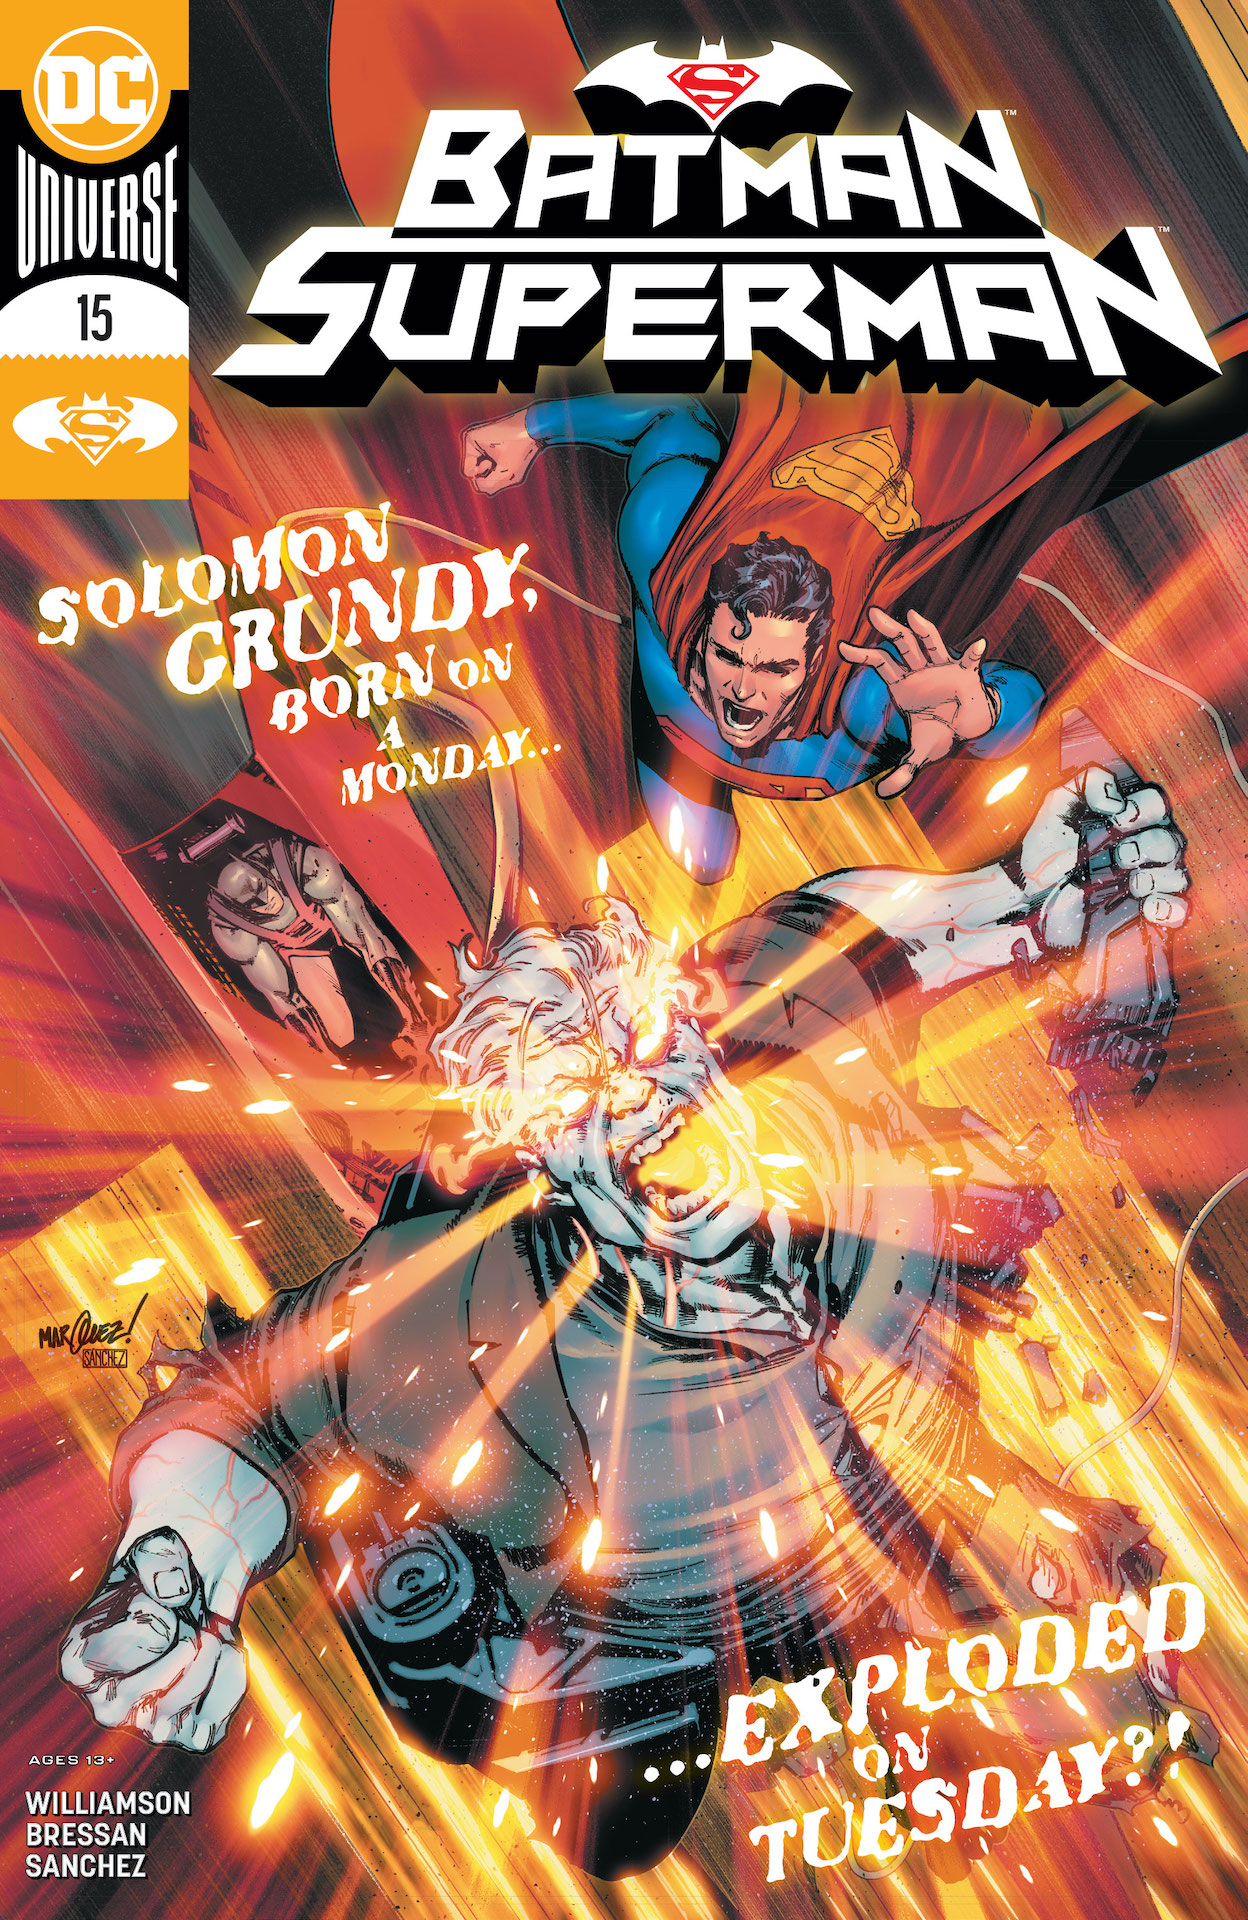 DC Preview: Batman/Superman #15